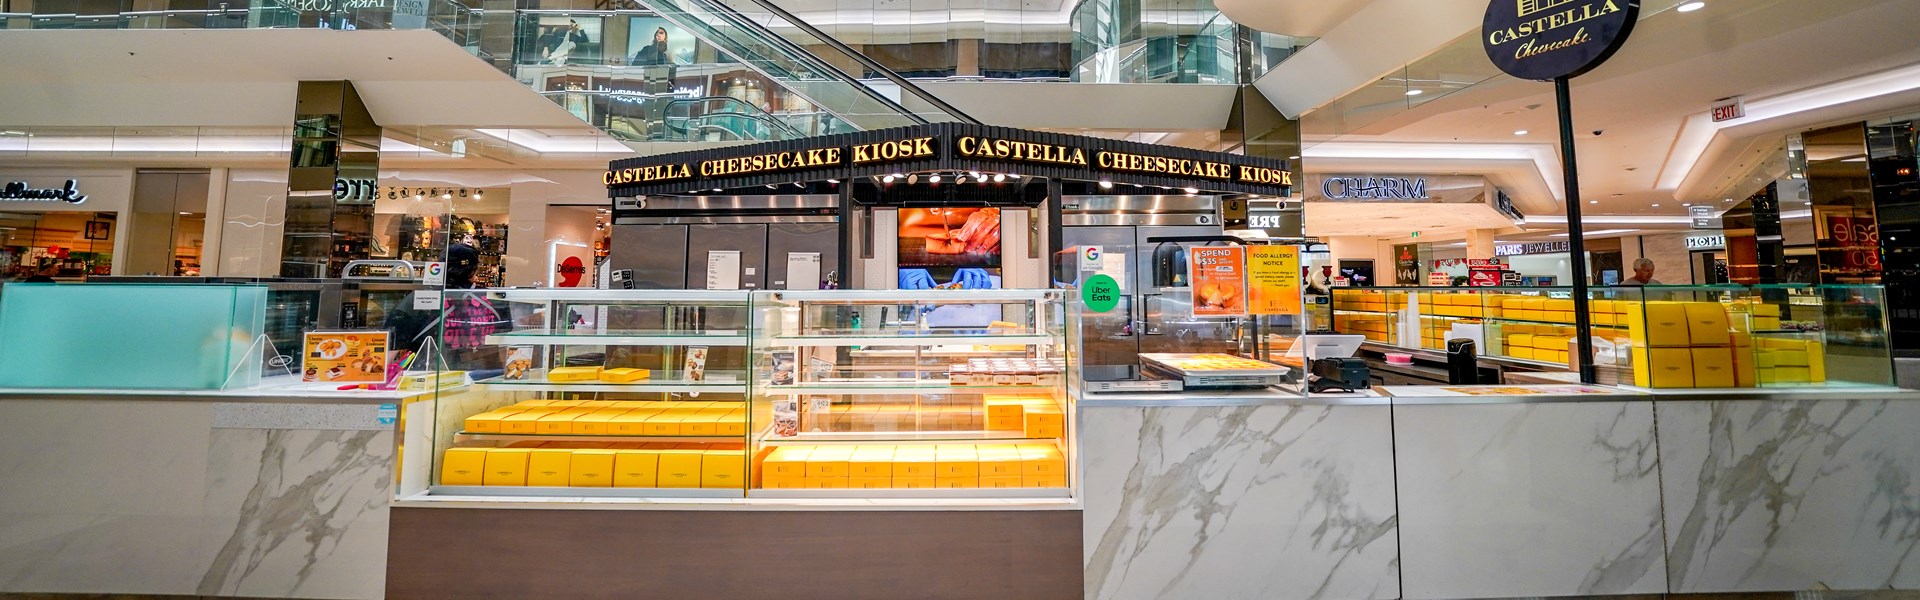 Castella Cheesecake